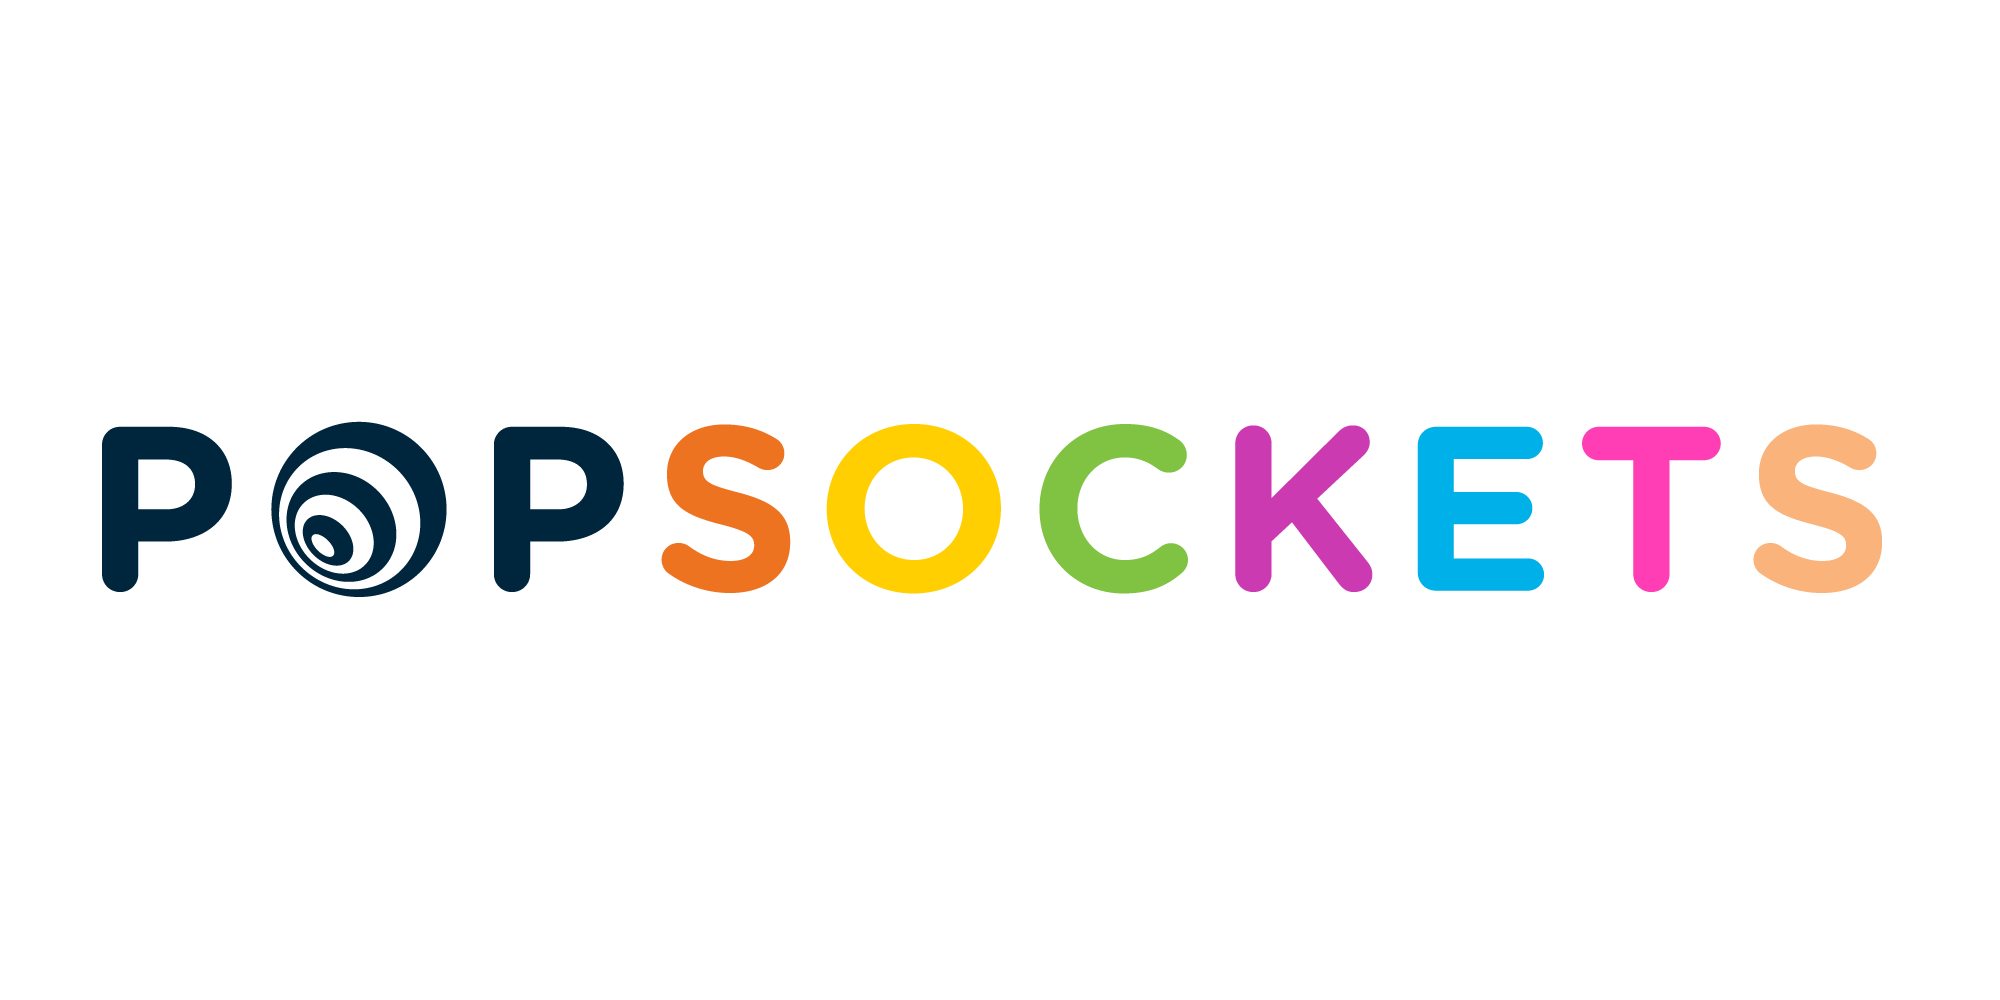 popsockets logo.png